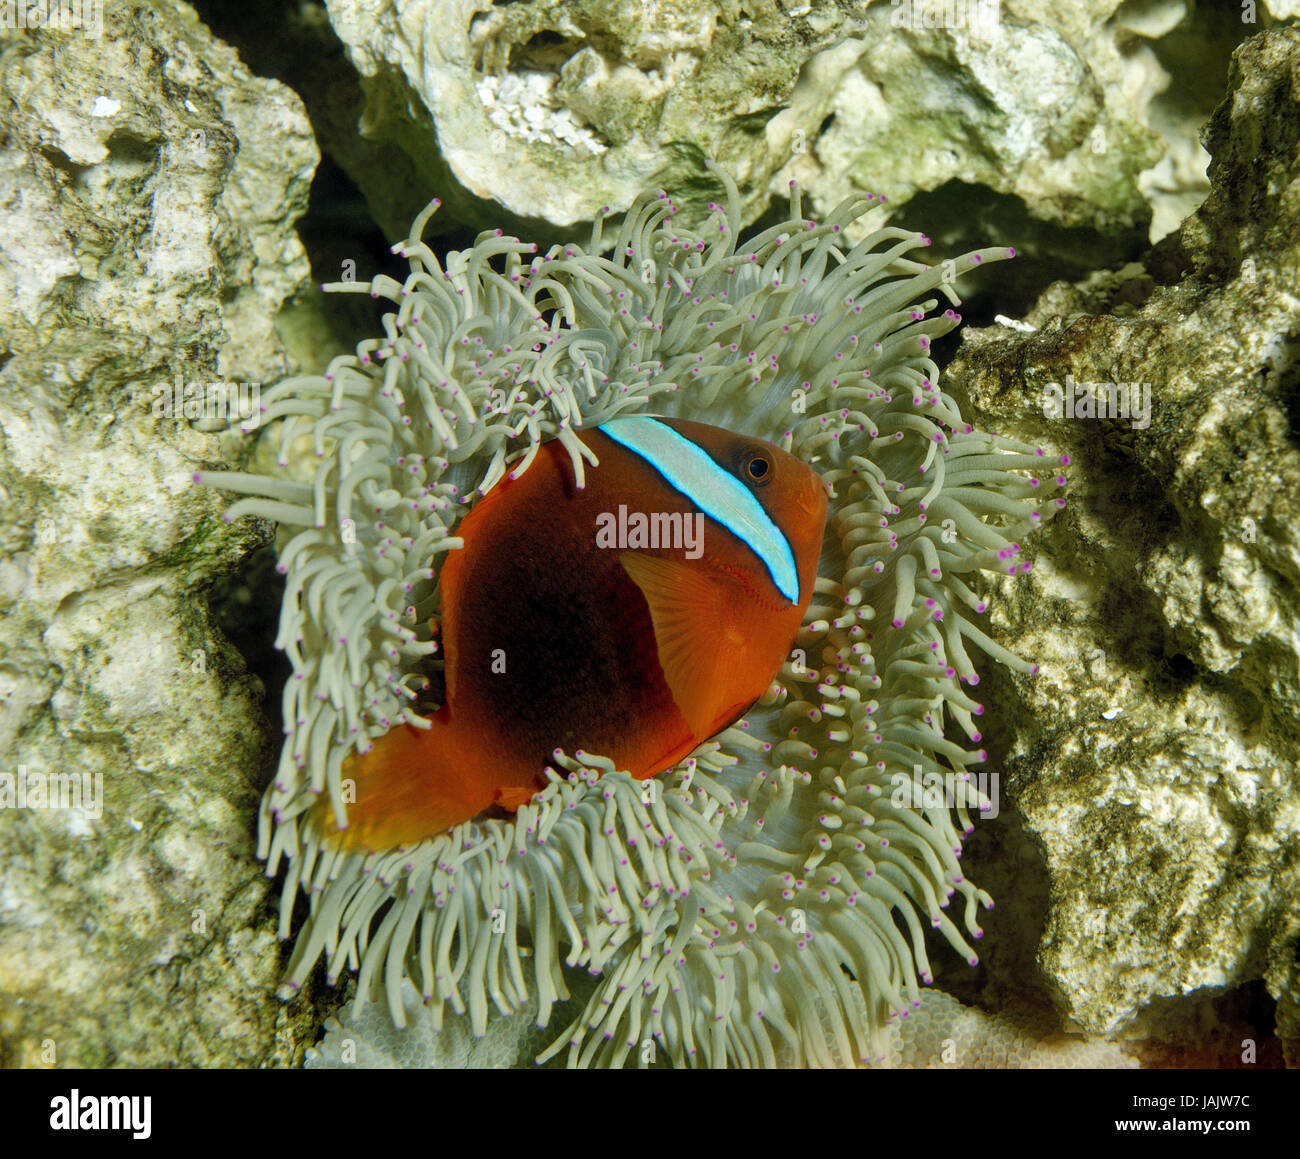 Pez de anémona roja,Amphiprion frenatus,anémona de mar, Foto de stock